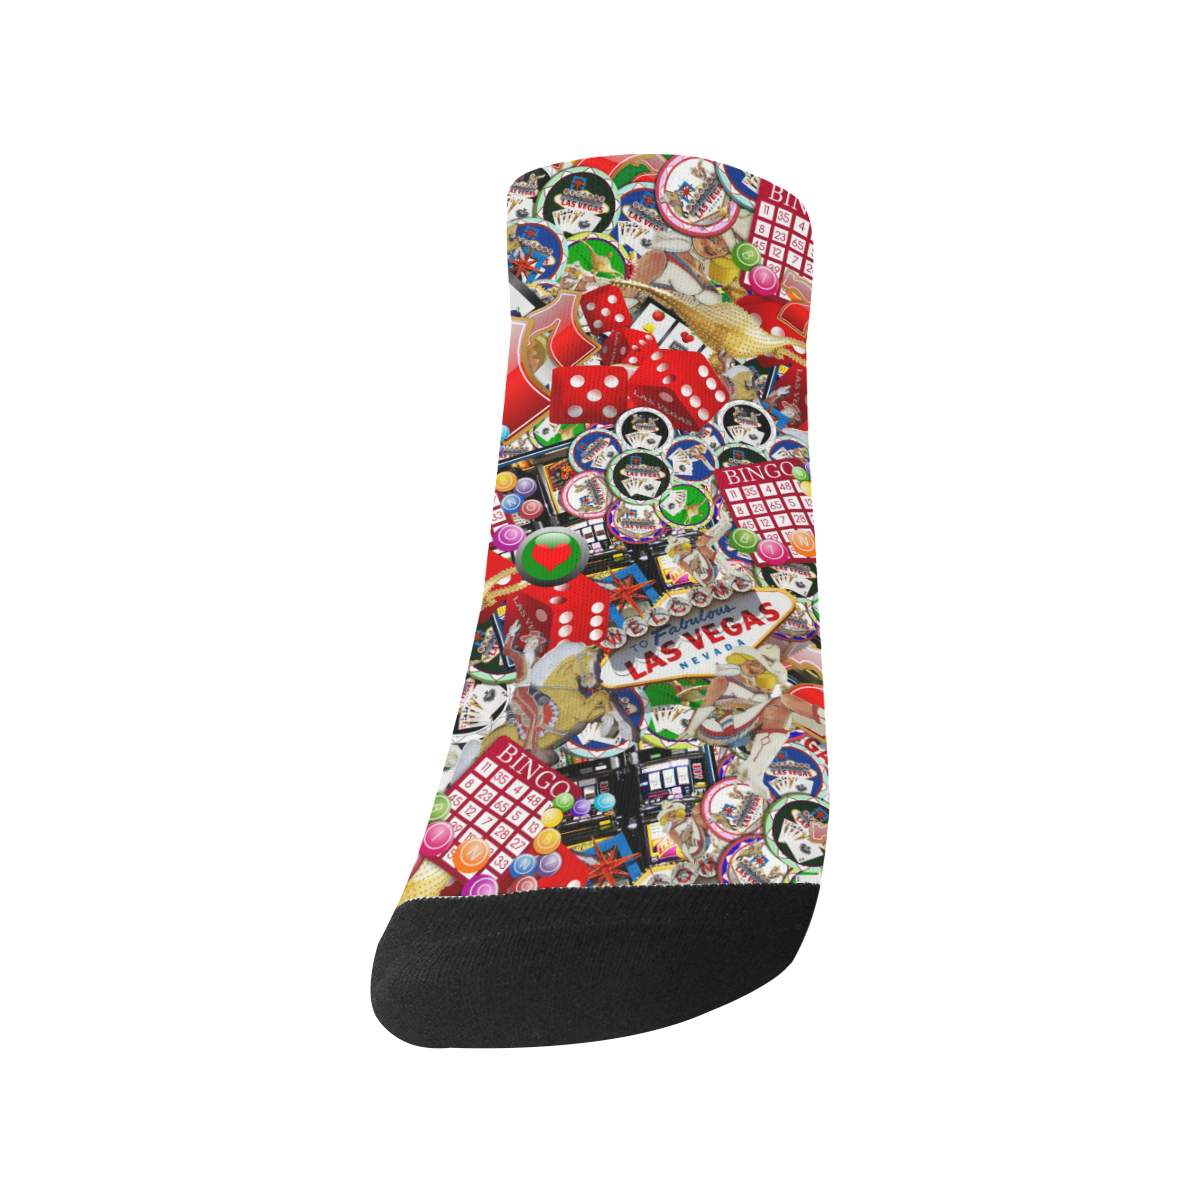 Gamblers Delight - Las Vegas Icons Men's Ankle Socks